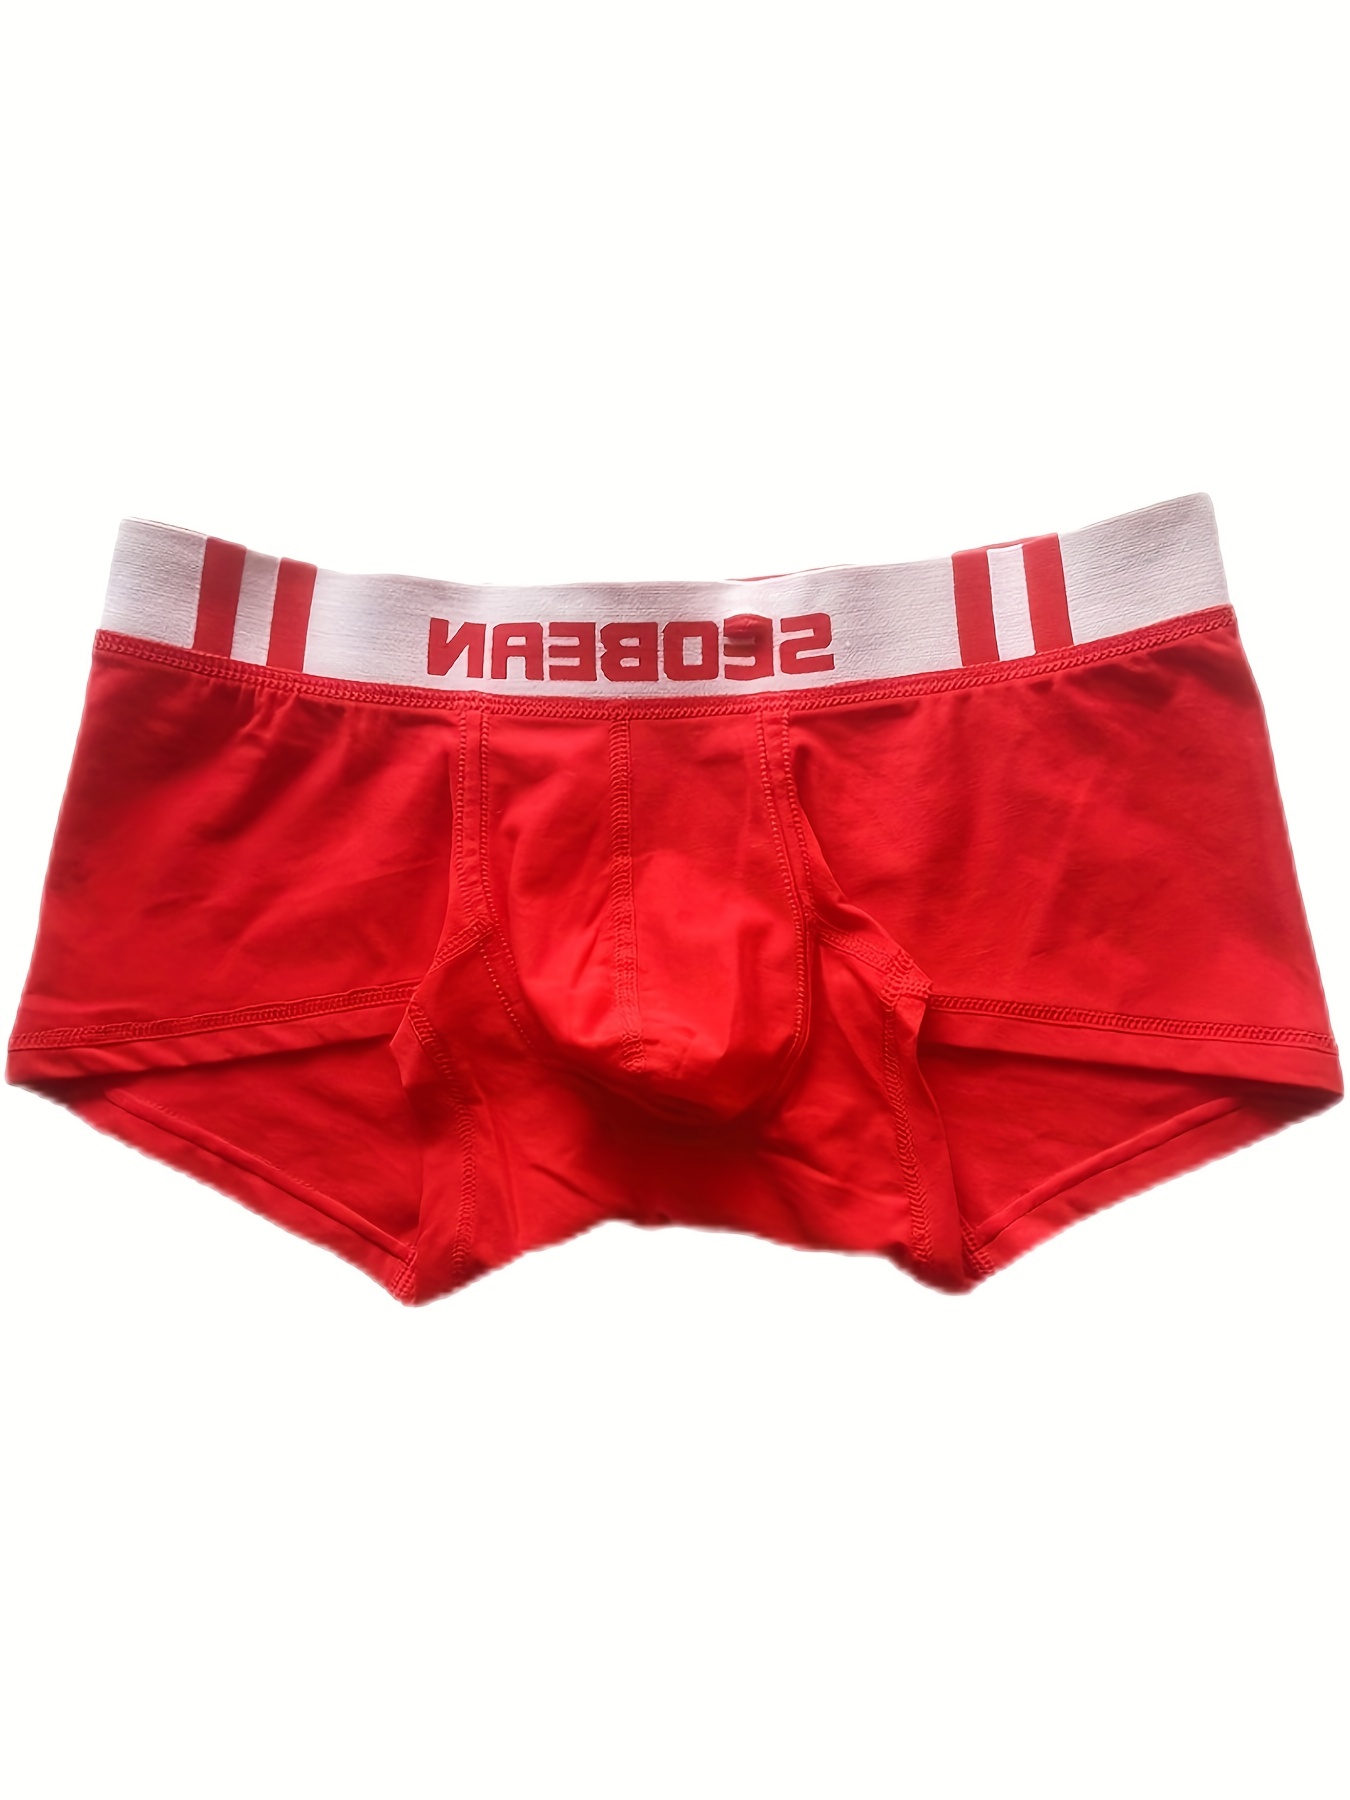 Baker Mayfield Red Rose Men's Boxer Brief  Swag outfits men, Mens pants  fashion, Men's boxer briefs